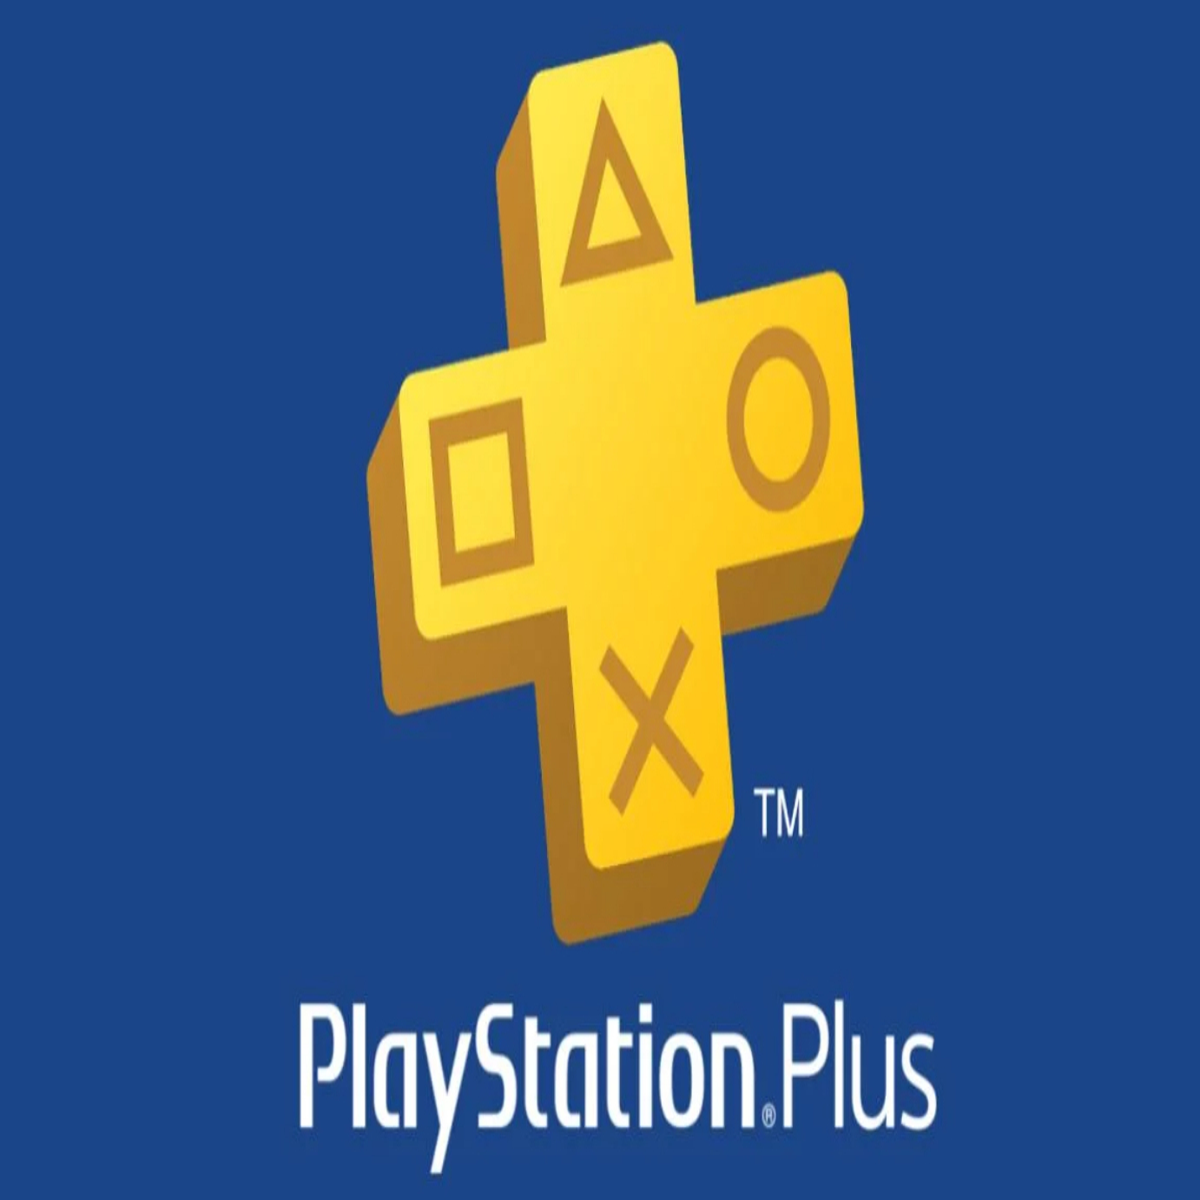 PlayStation Plus: l'abbonamento di 12 mesi è in offerta a 39,99 euro